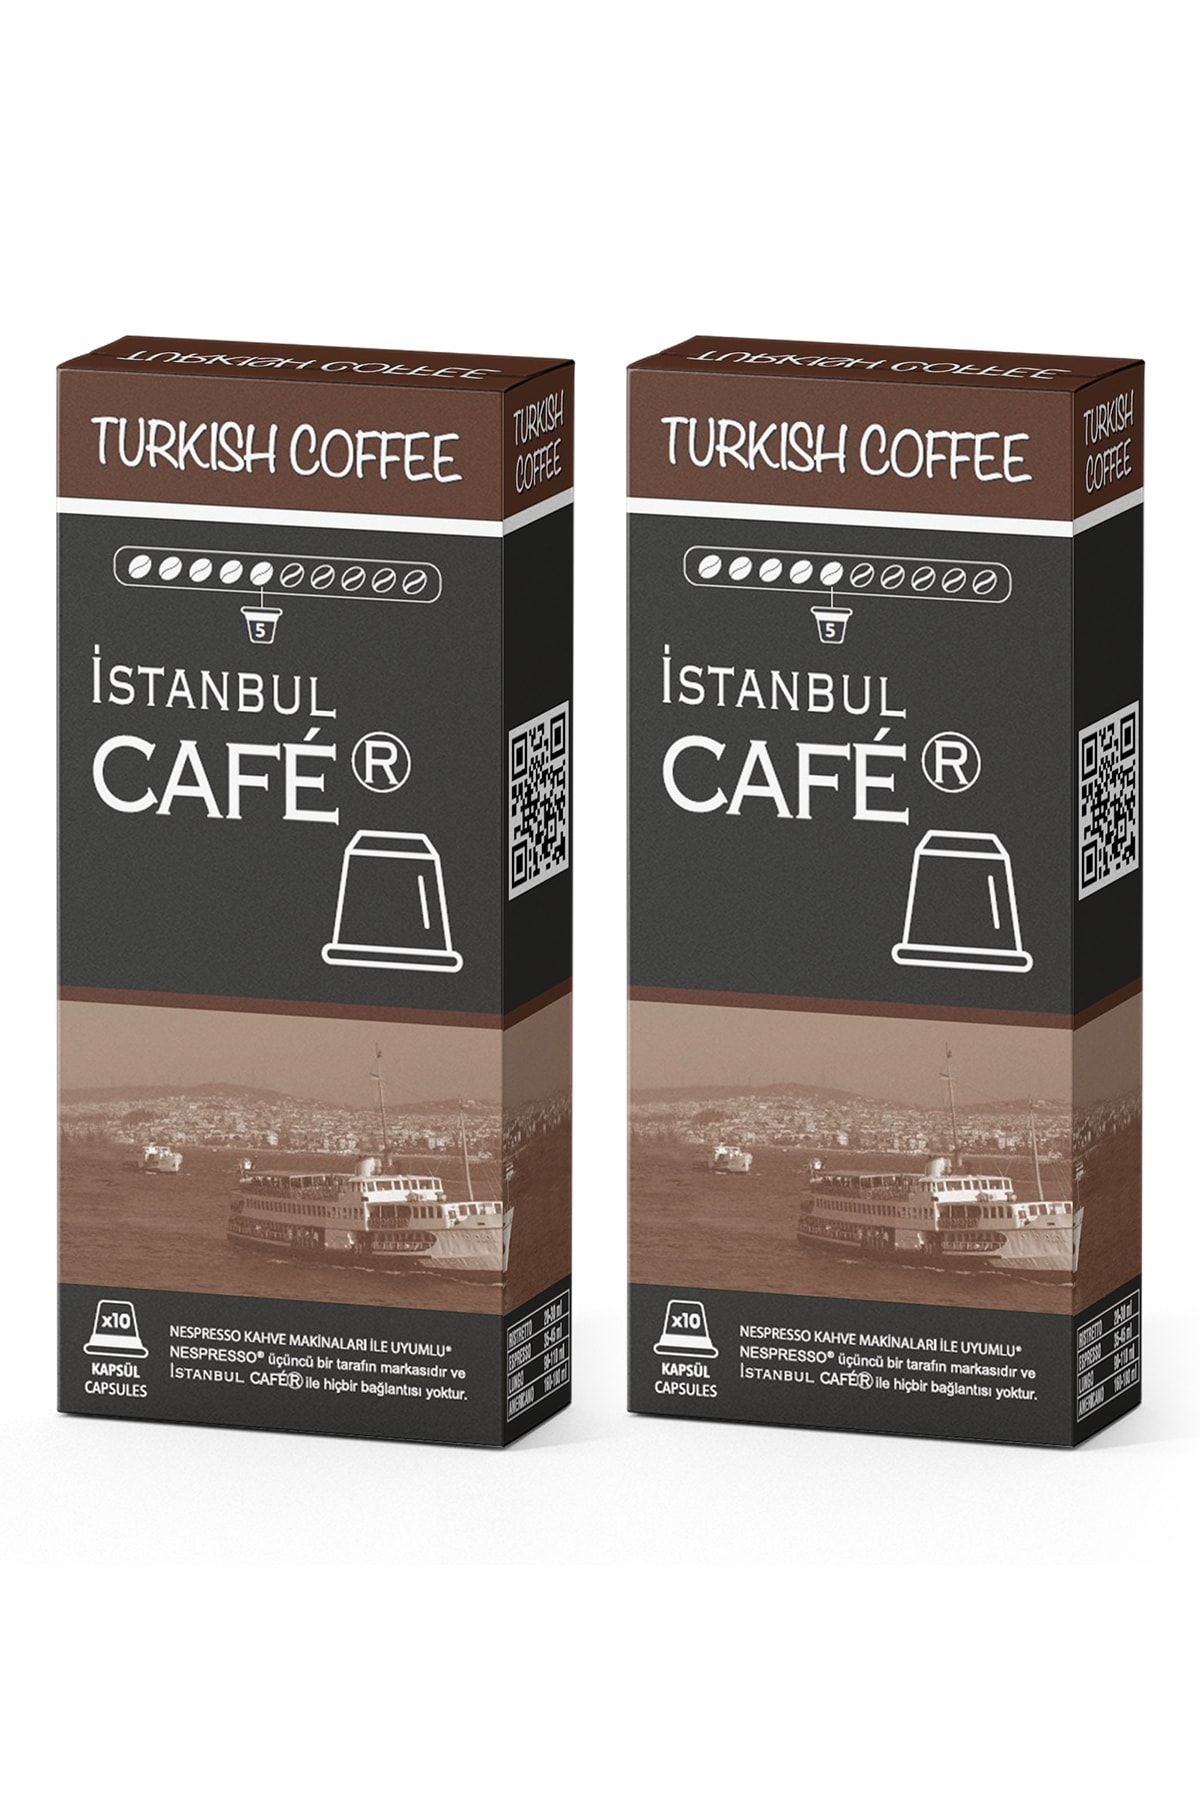 İstanbul Cafer Nespresso® Uyumlu Kapsül Kahve Türk Kahvesi 20 Kapül